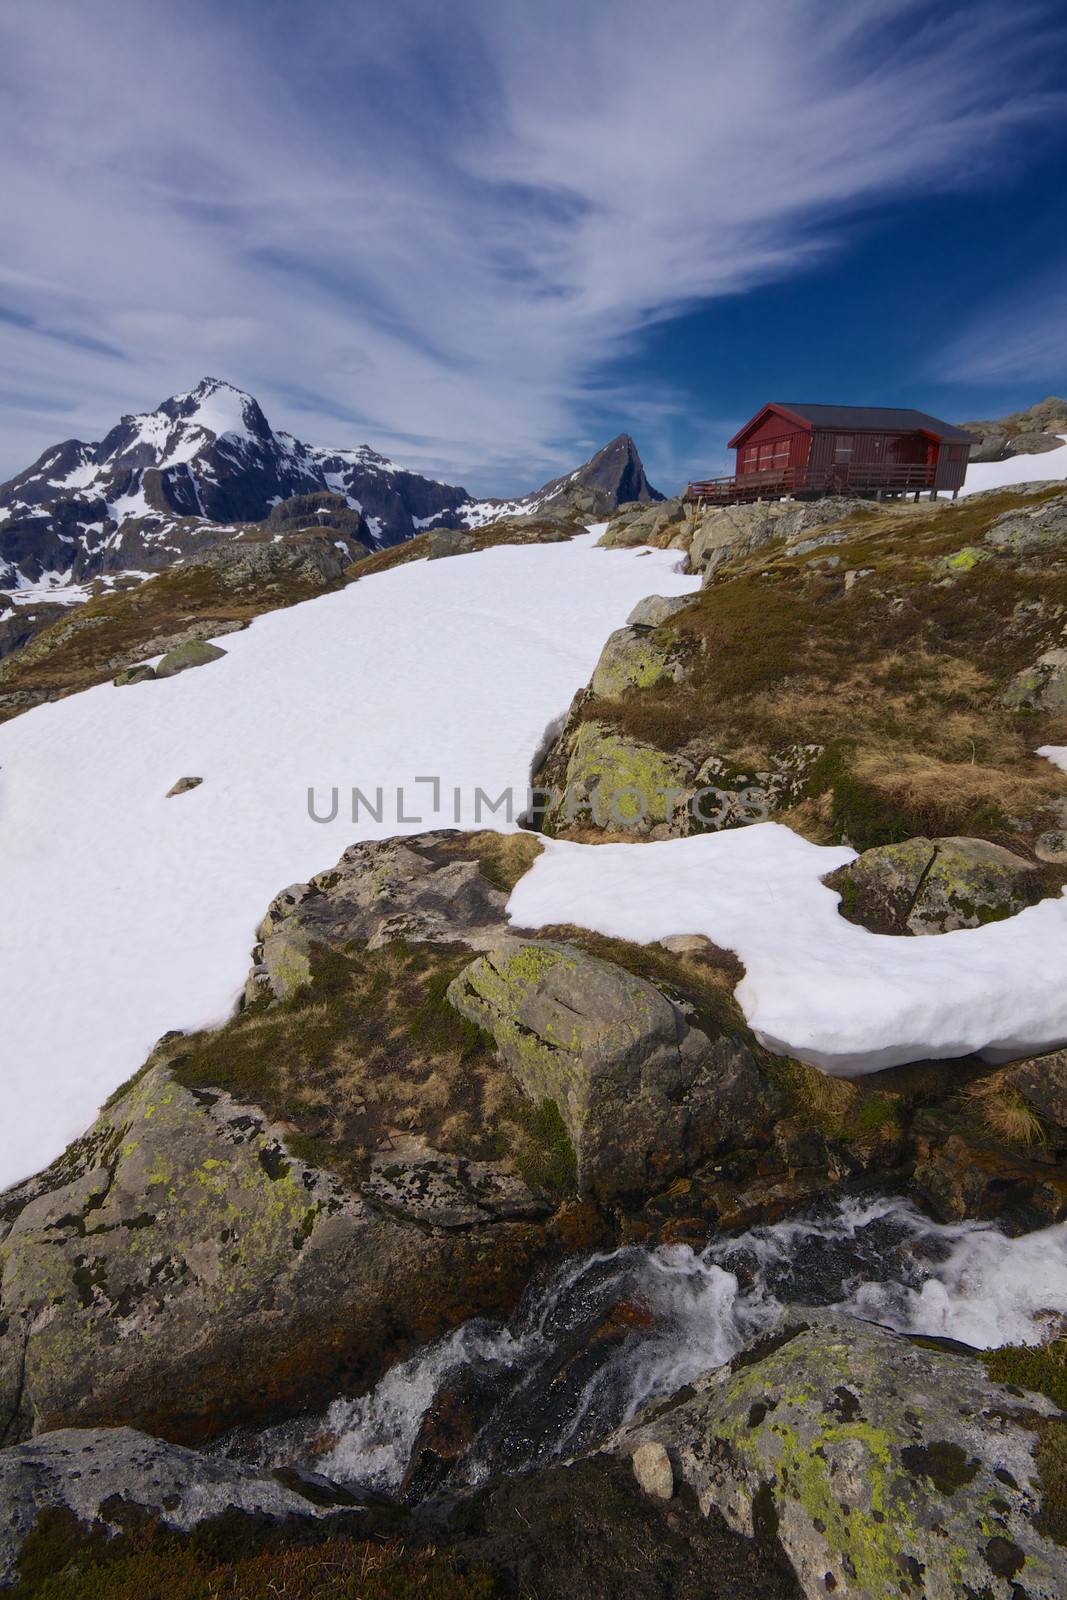 Norwegian mountain cabin by Harvepino